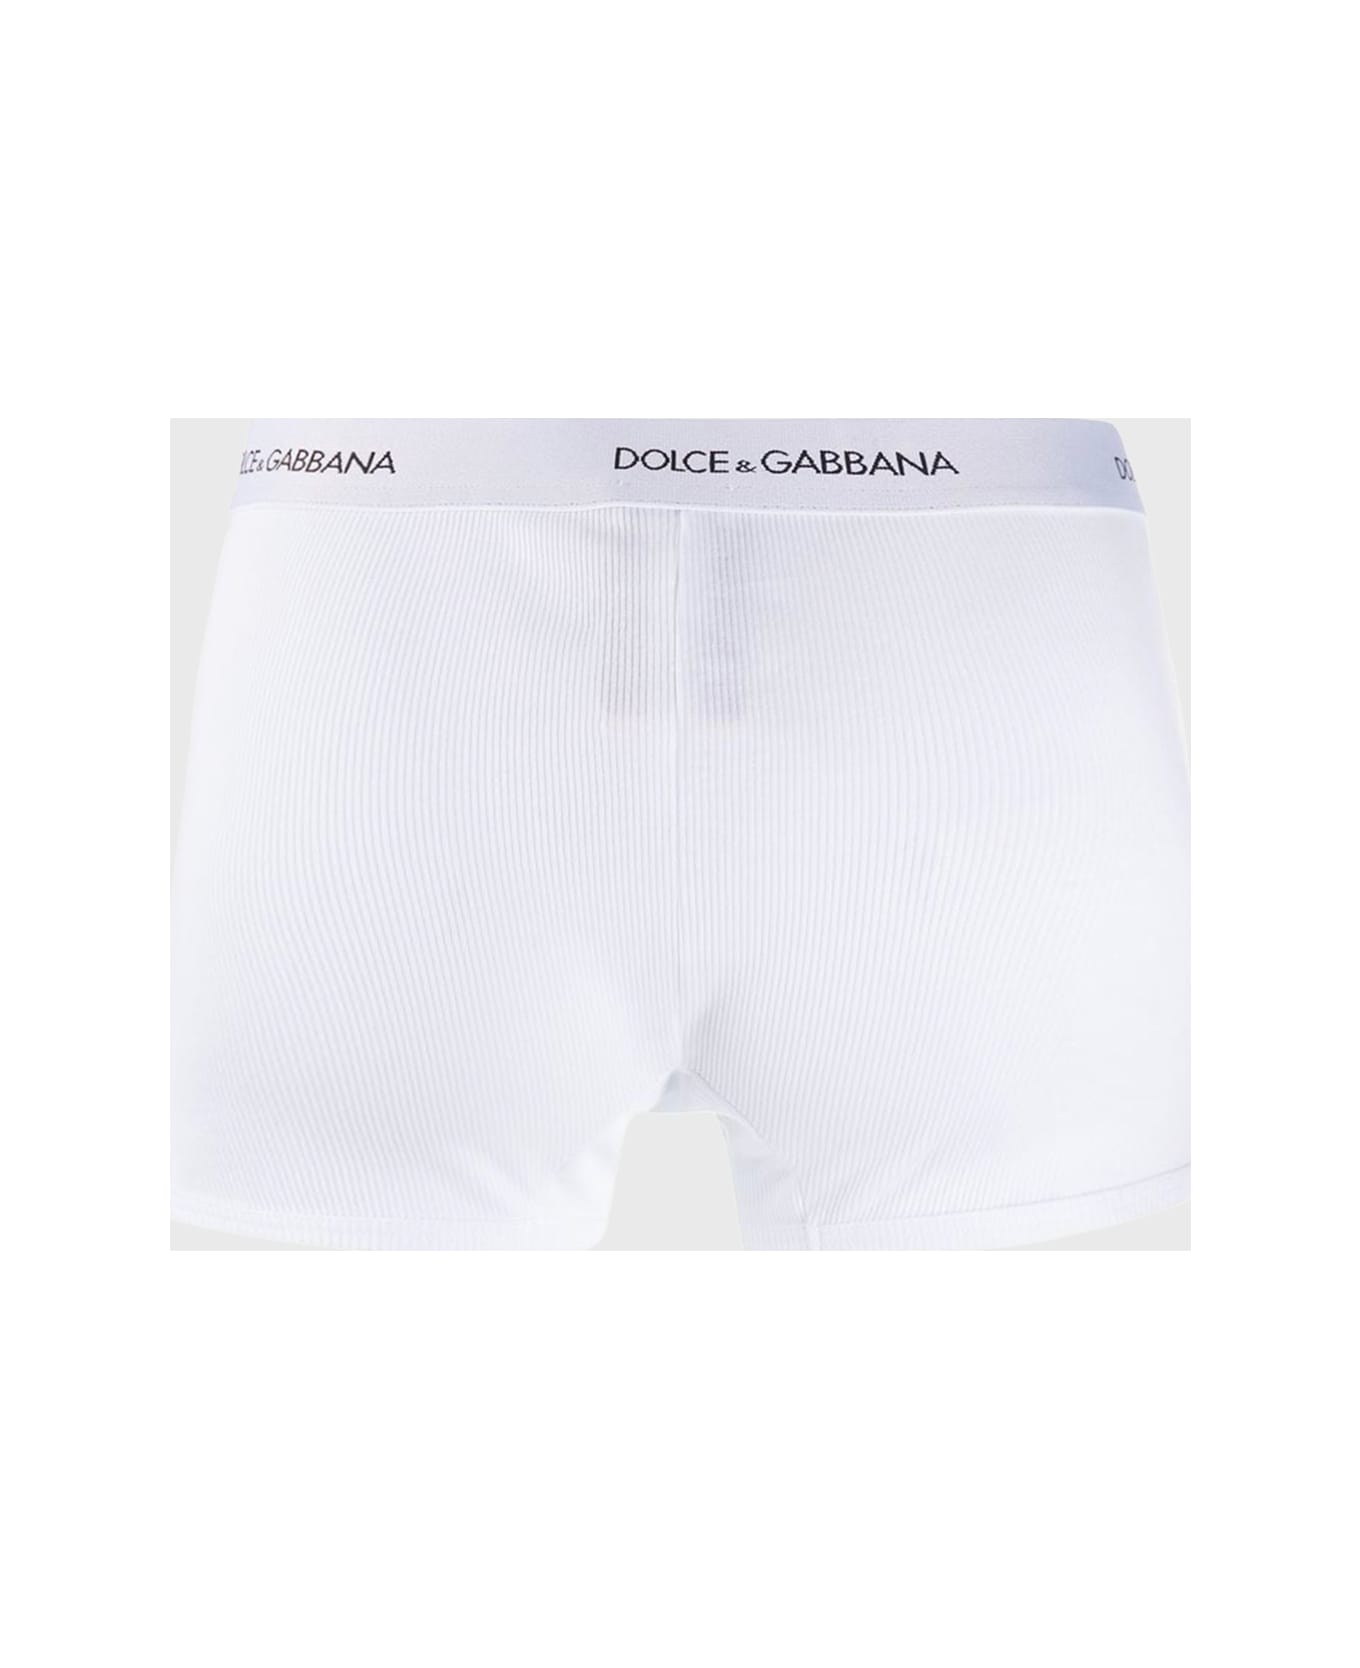 Dolce & Gabbana White Cotton Boxers - BIACO OTTICO ショーツ